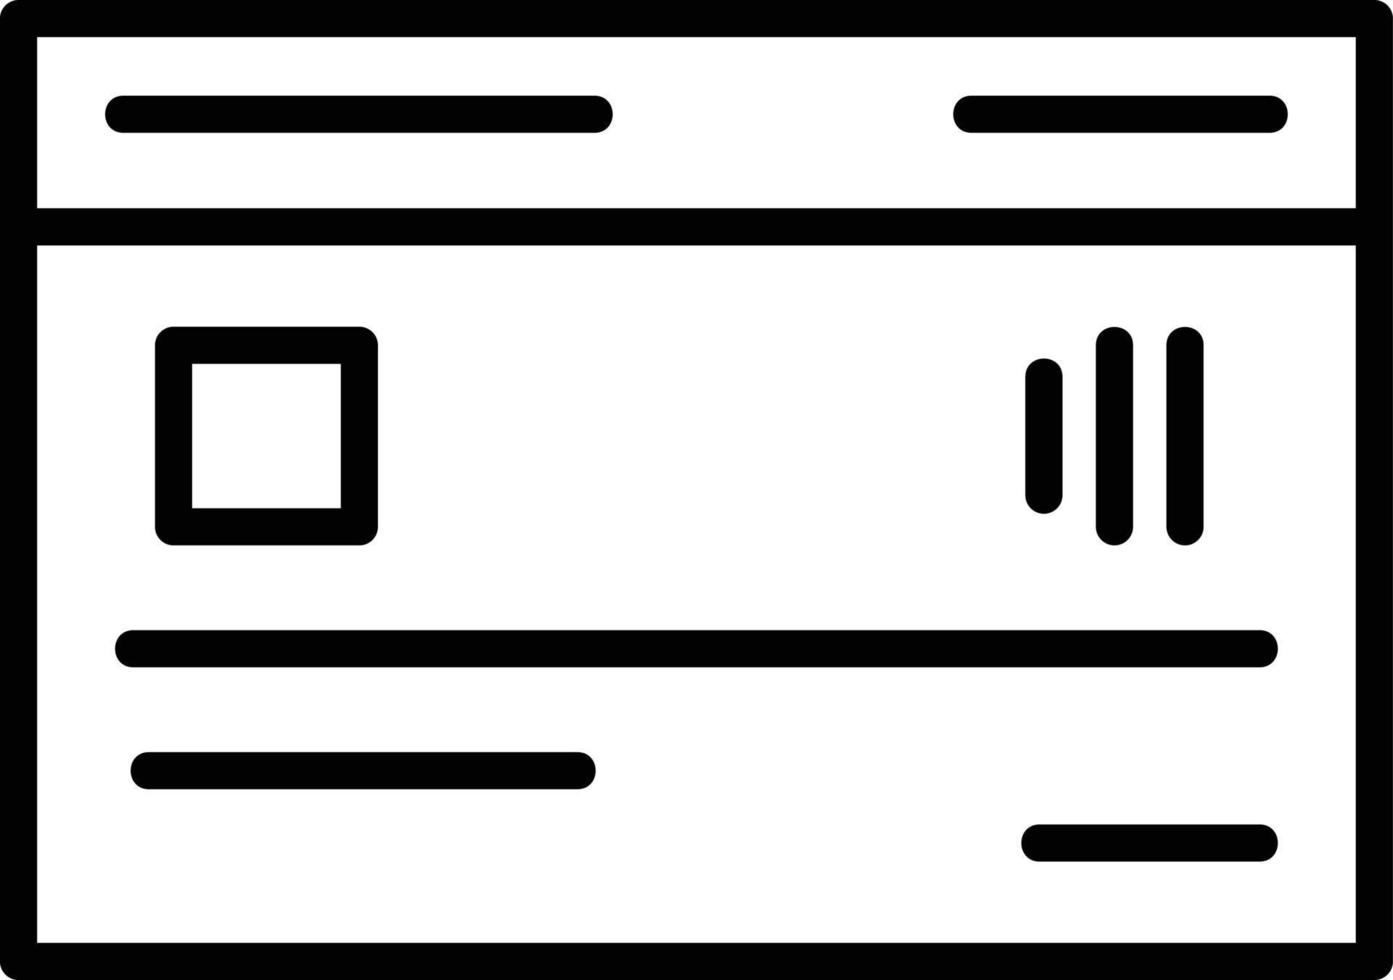 kreditkort linje ikon vektor